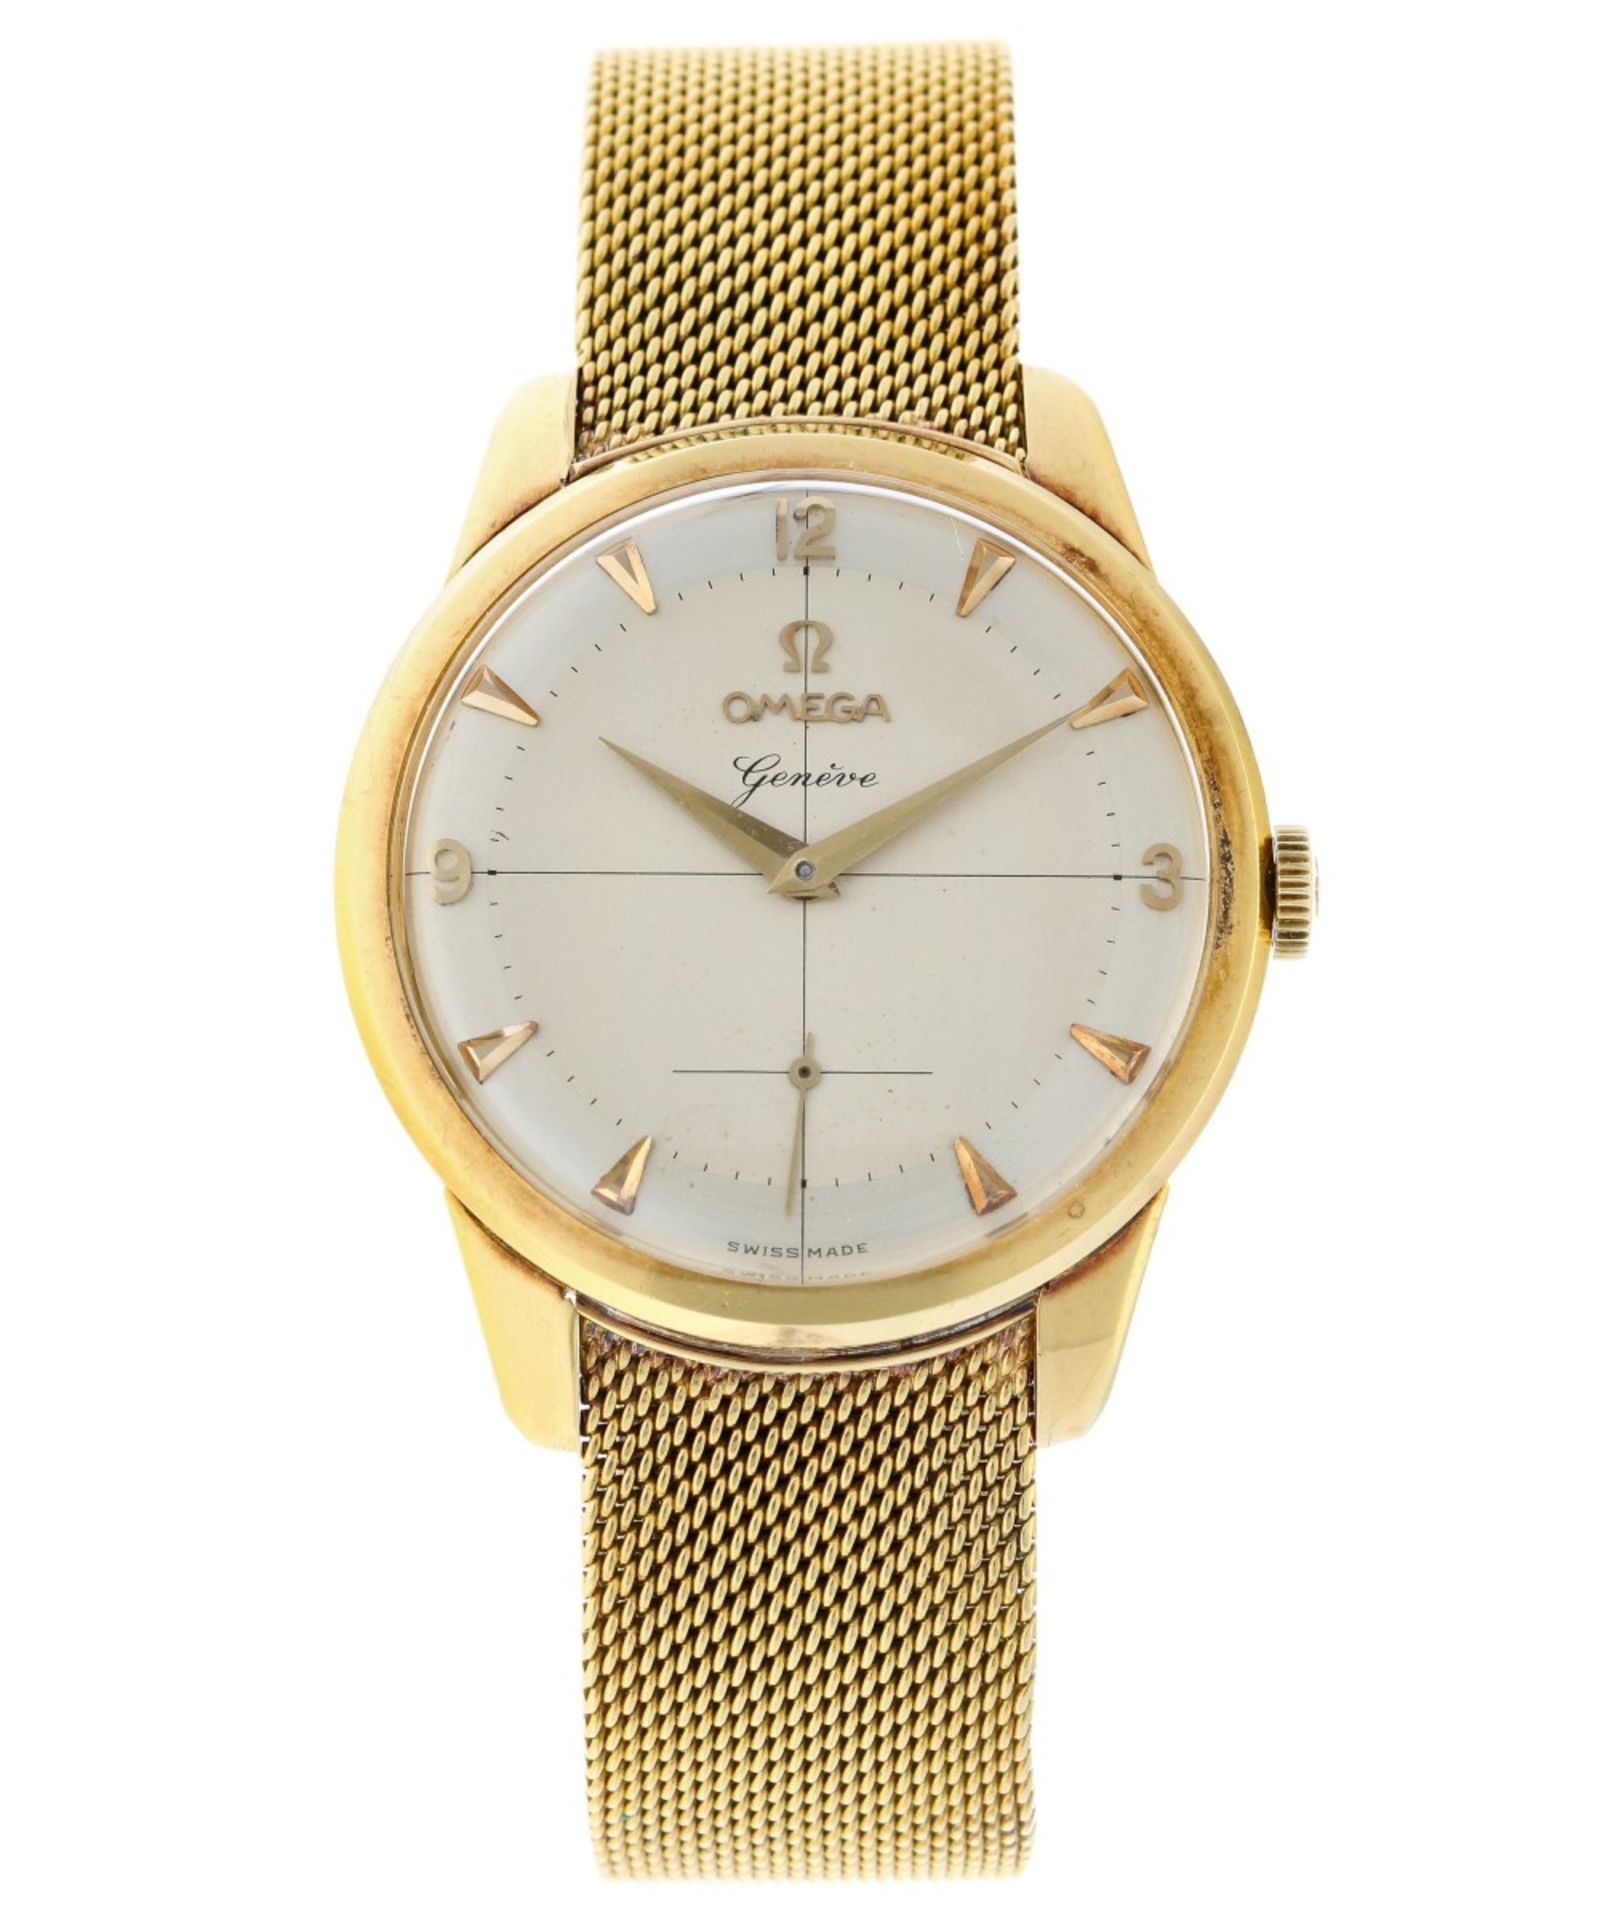 Omega Genéve 2748 - Men's watch - ca. 1954